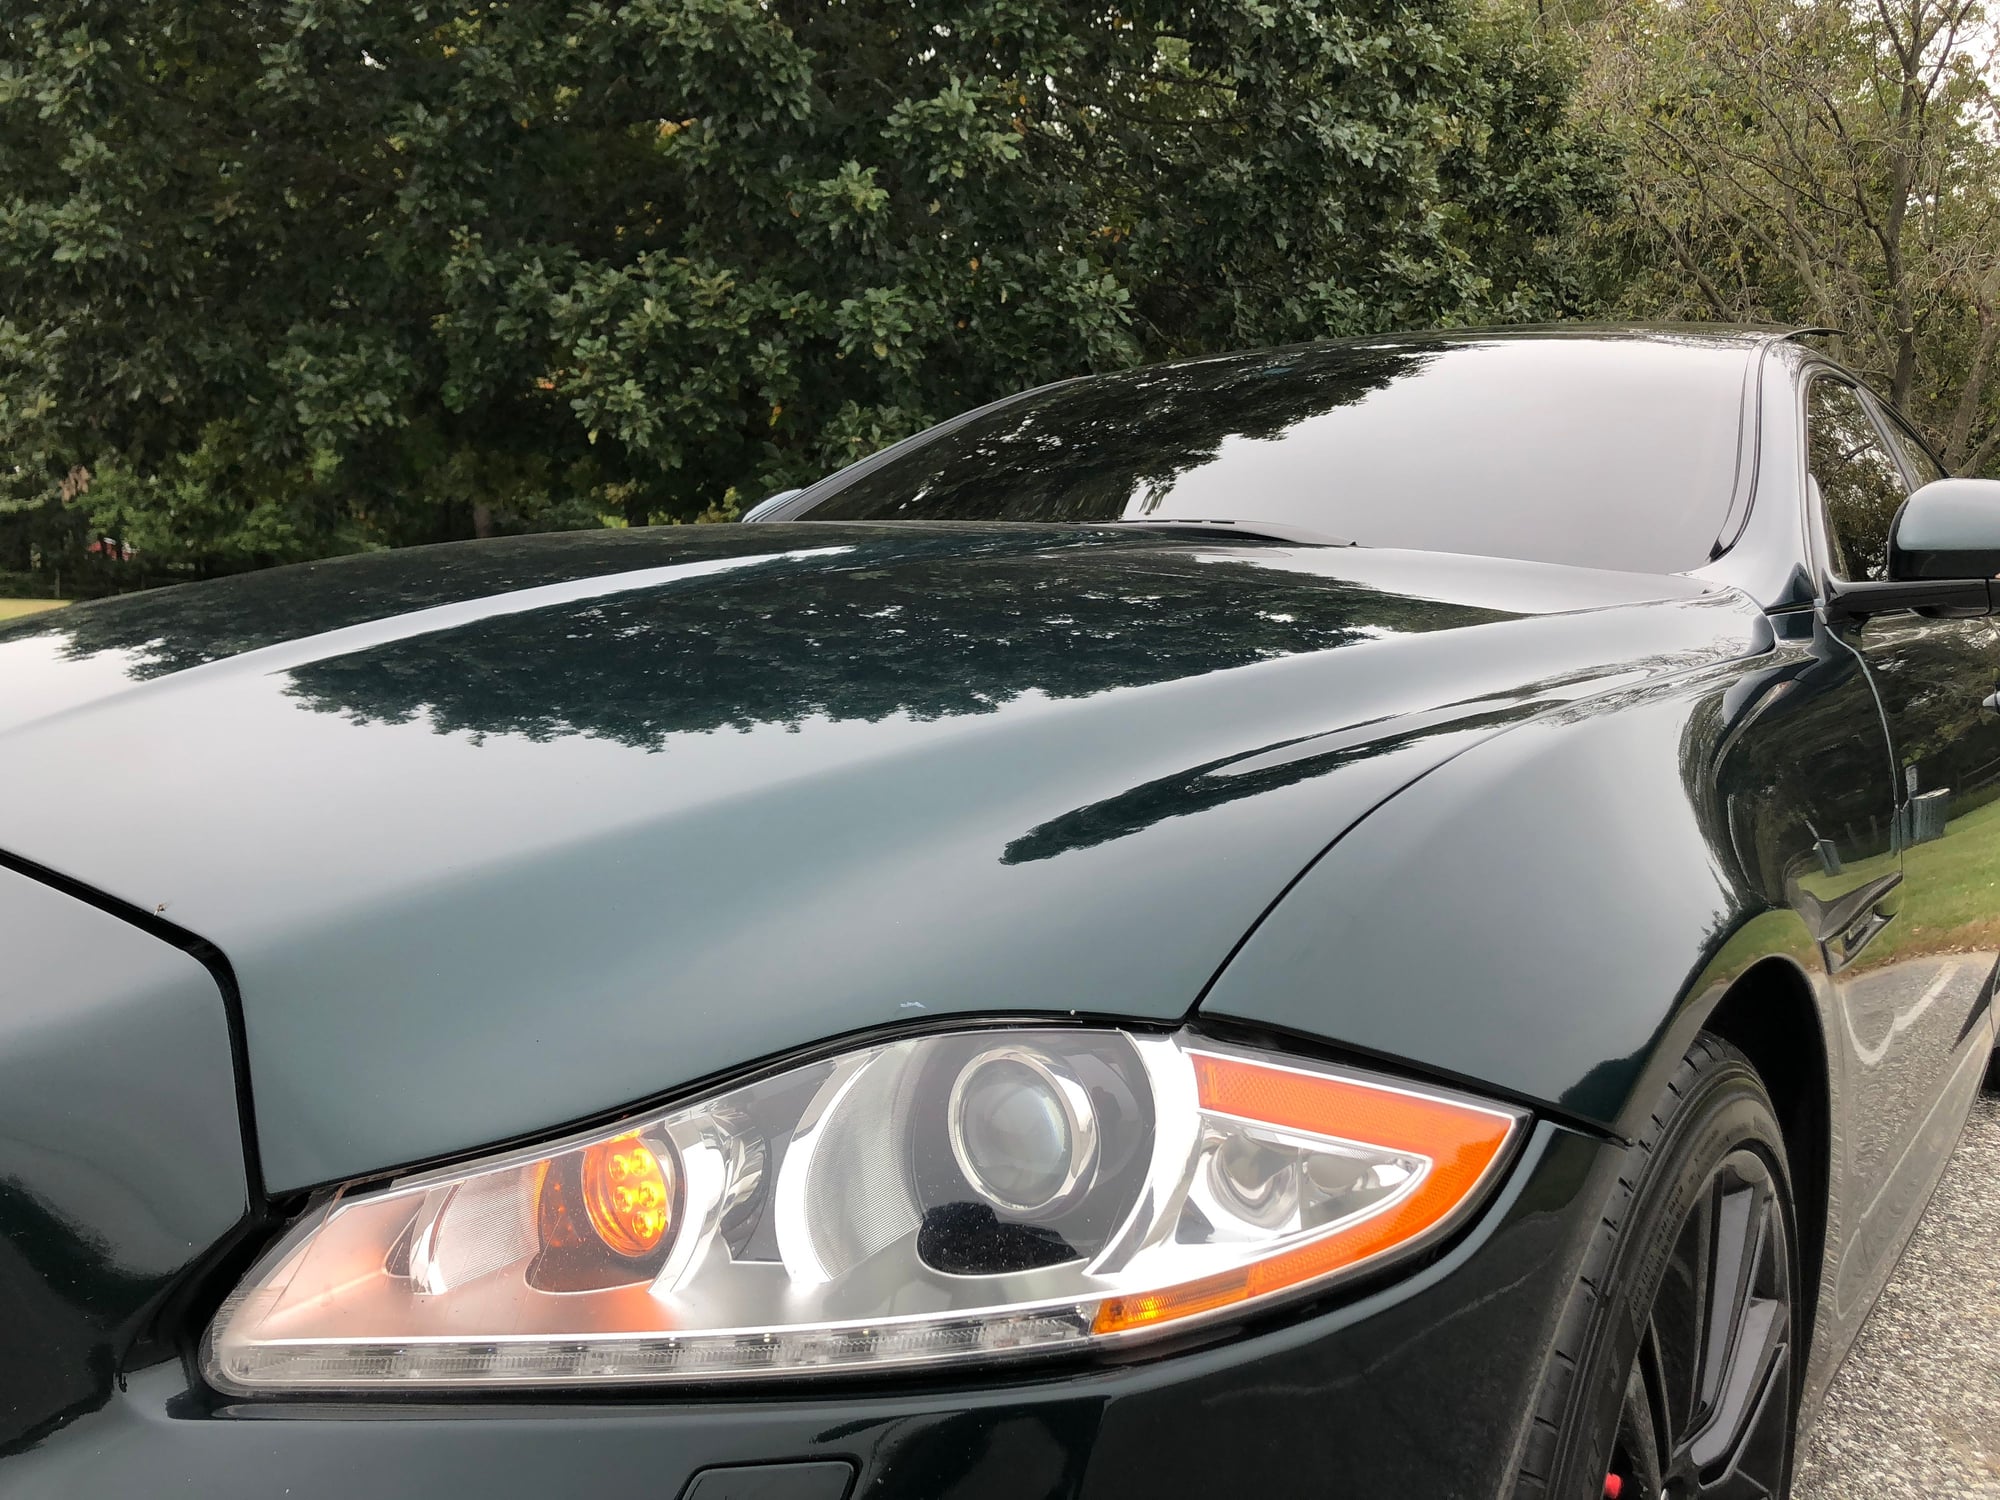 2012 Jaguar XJ - 2012 jaguar XJL super charged 630 HP *still under extended warranty* - Used - VIN SAJWA2GE5CMV32928 - 63,000 Miles - 8 cyl - 2WD - Automatic - Sedan - Other - Fort Washington, MD 20744, United States